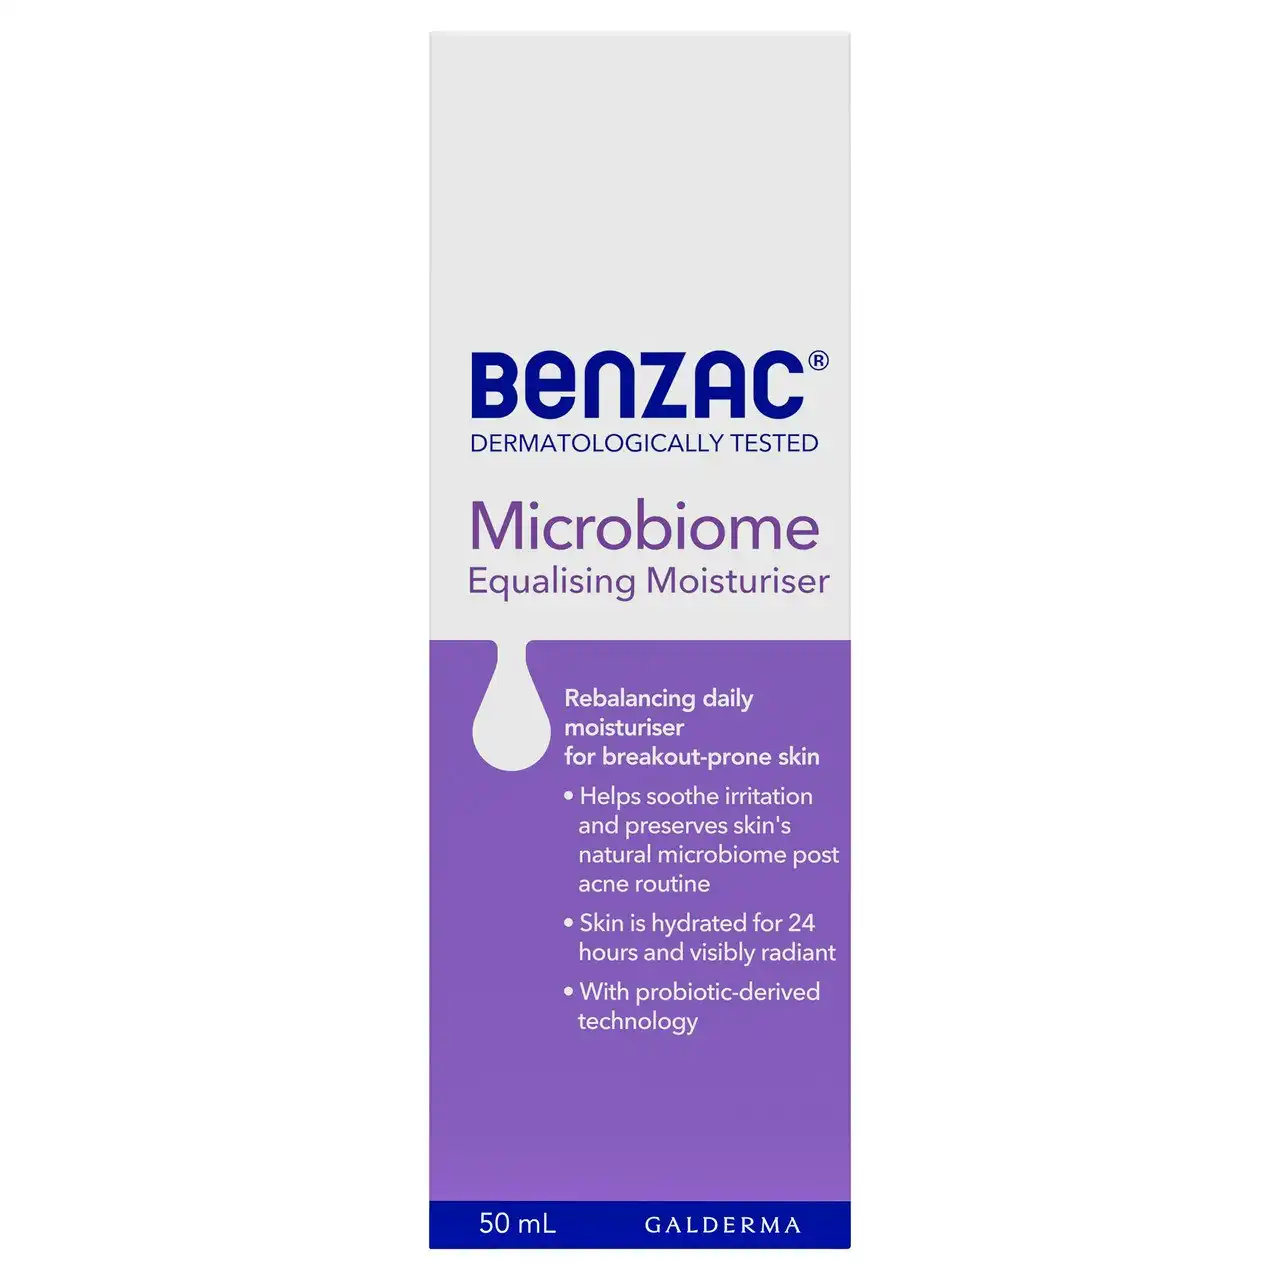 Benzac Microbiome Equalising Moisturiser